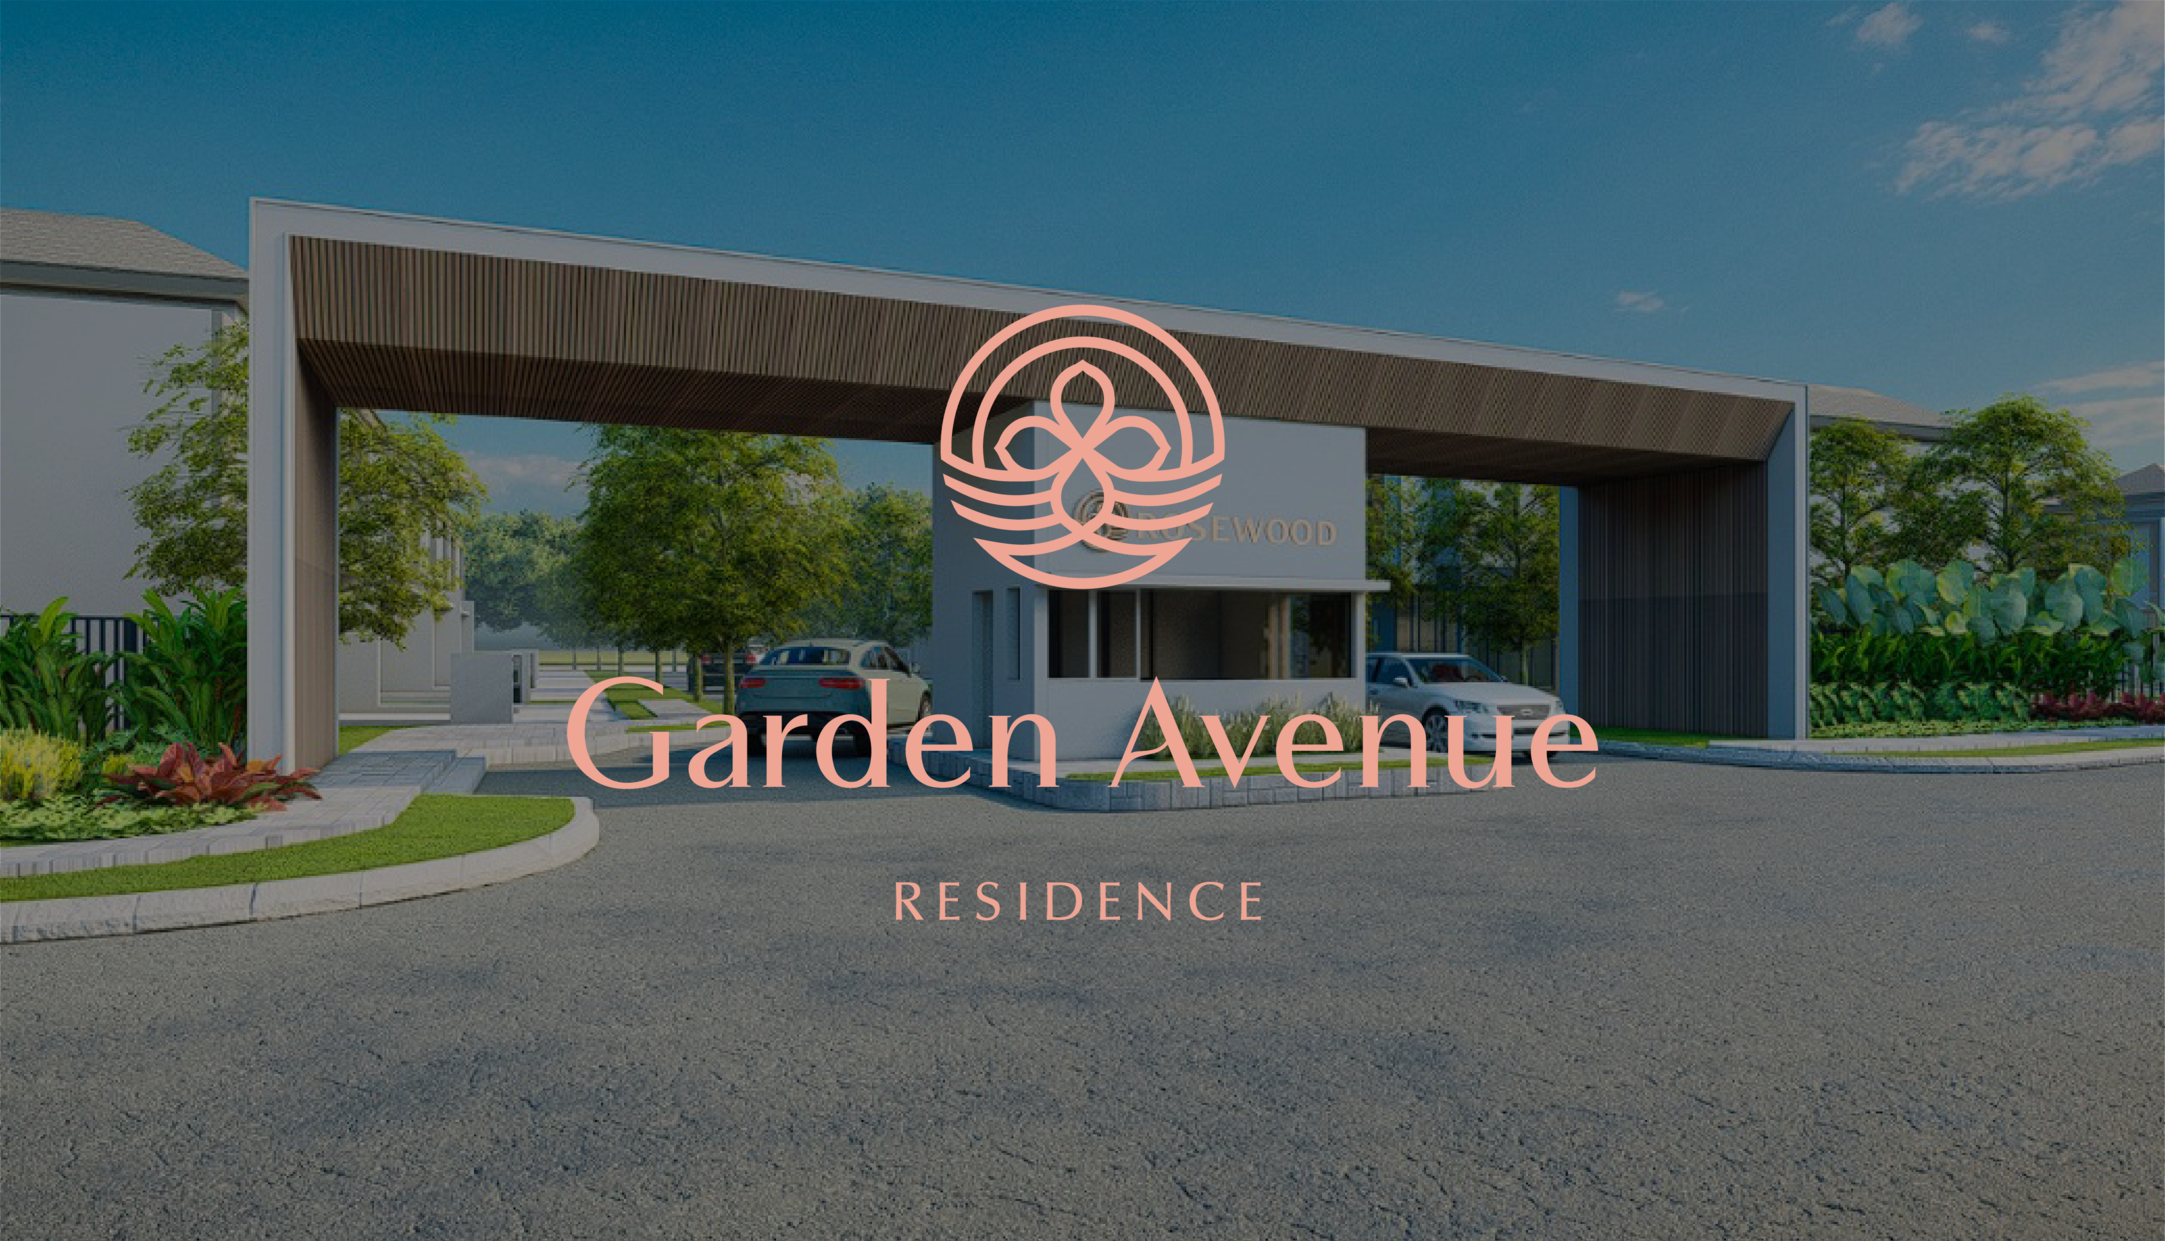 https://gardenavenueresidence.com/images/Gate_Thumbnail_Garden_Avenue_Residence_Rosewood-01.png